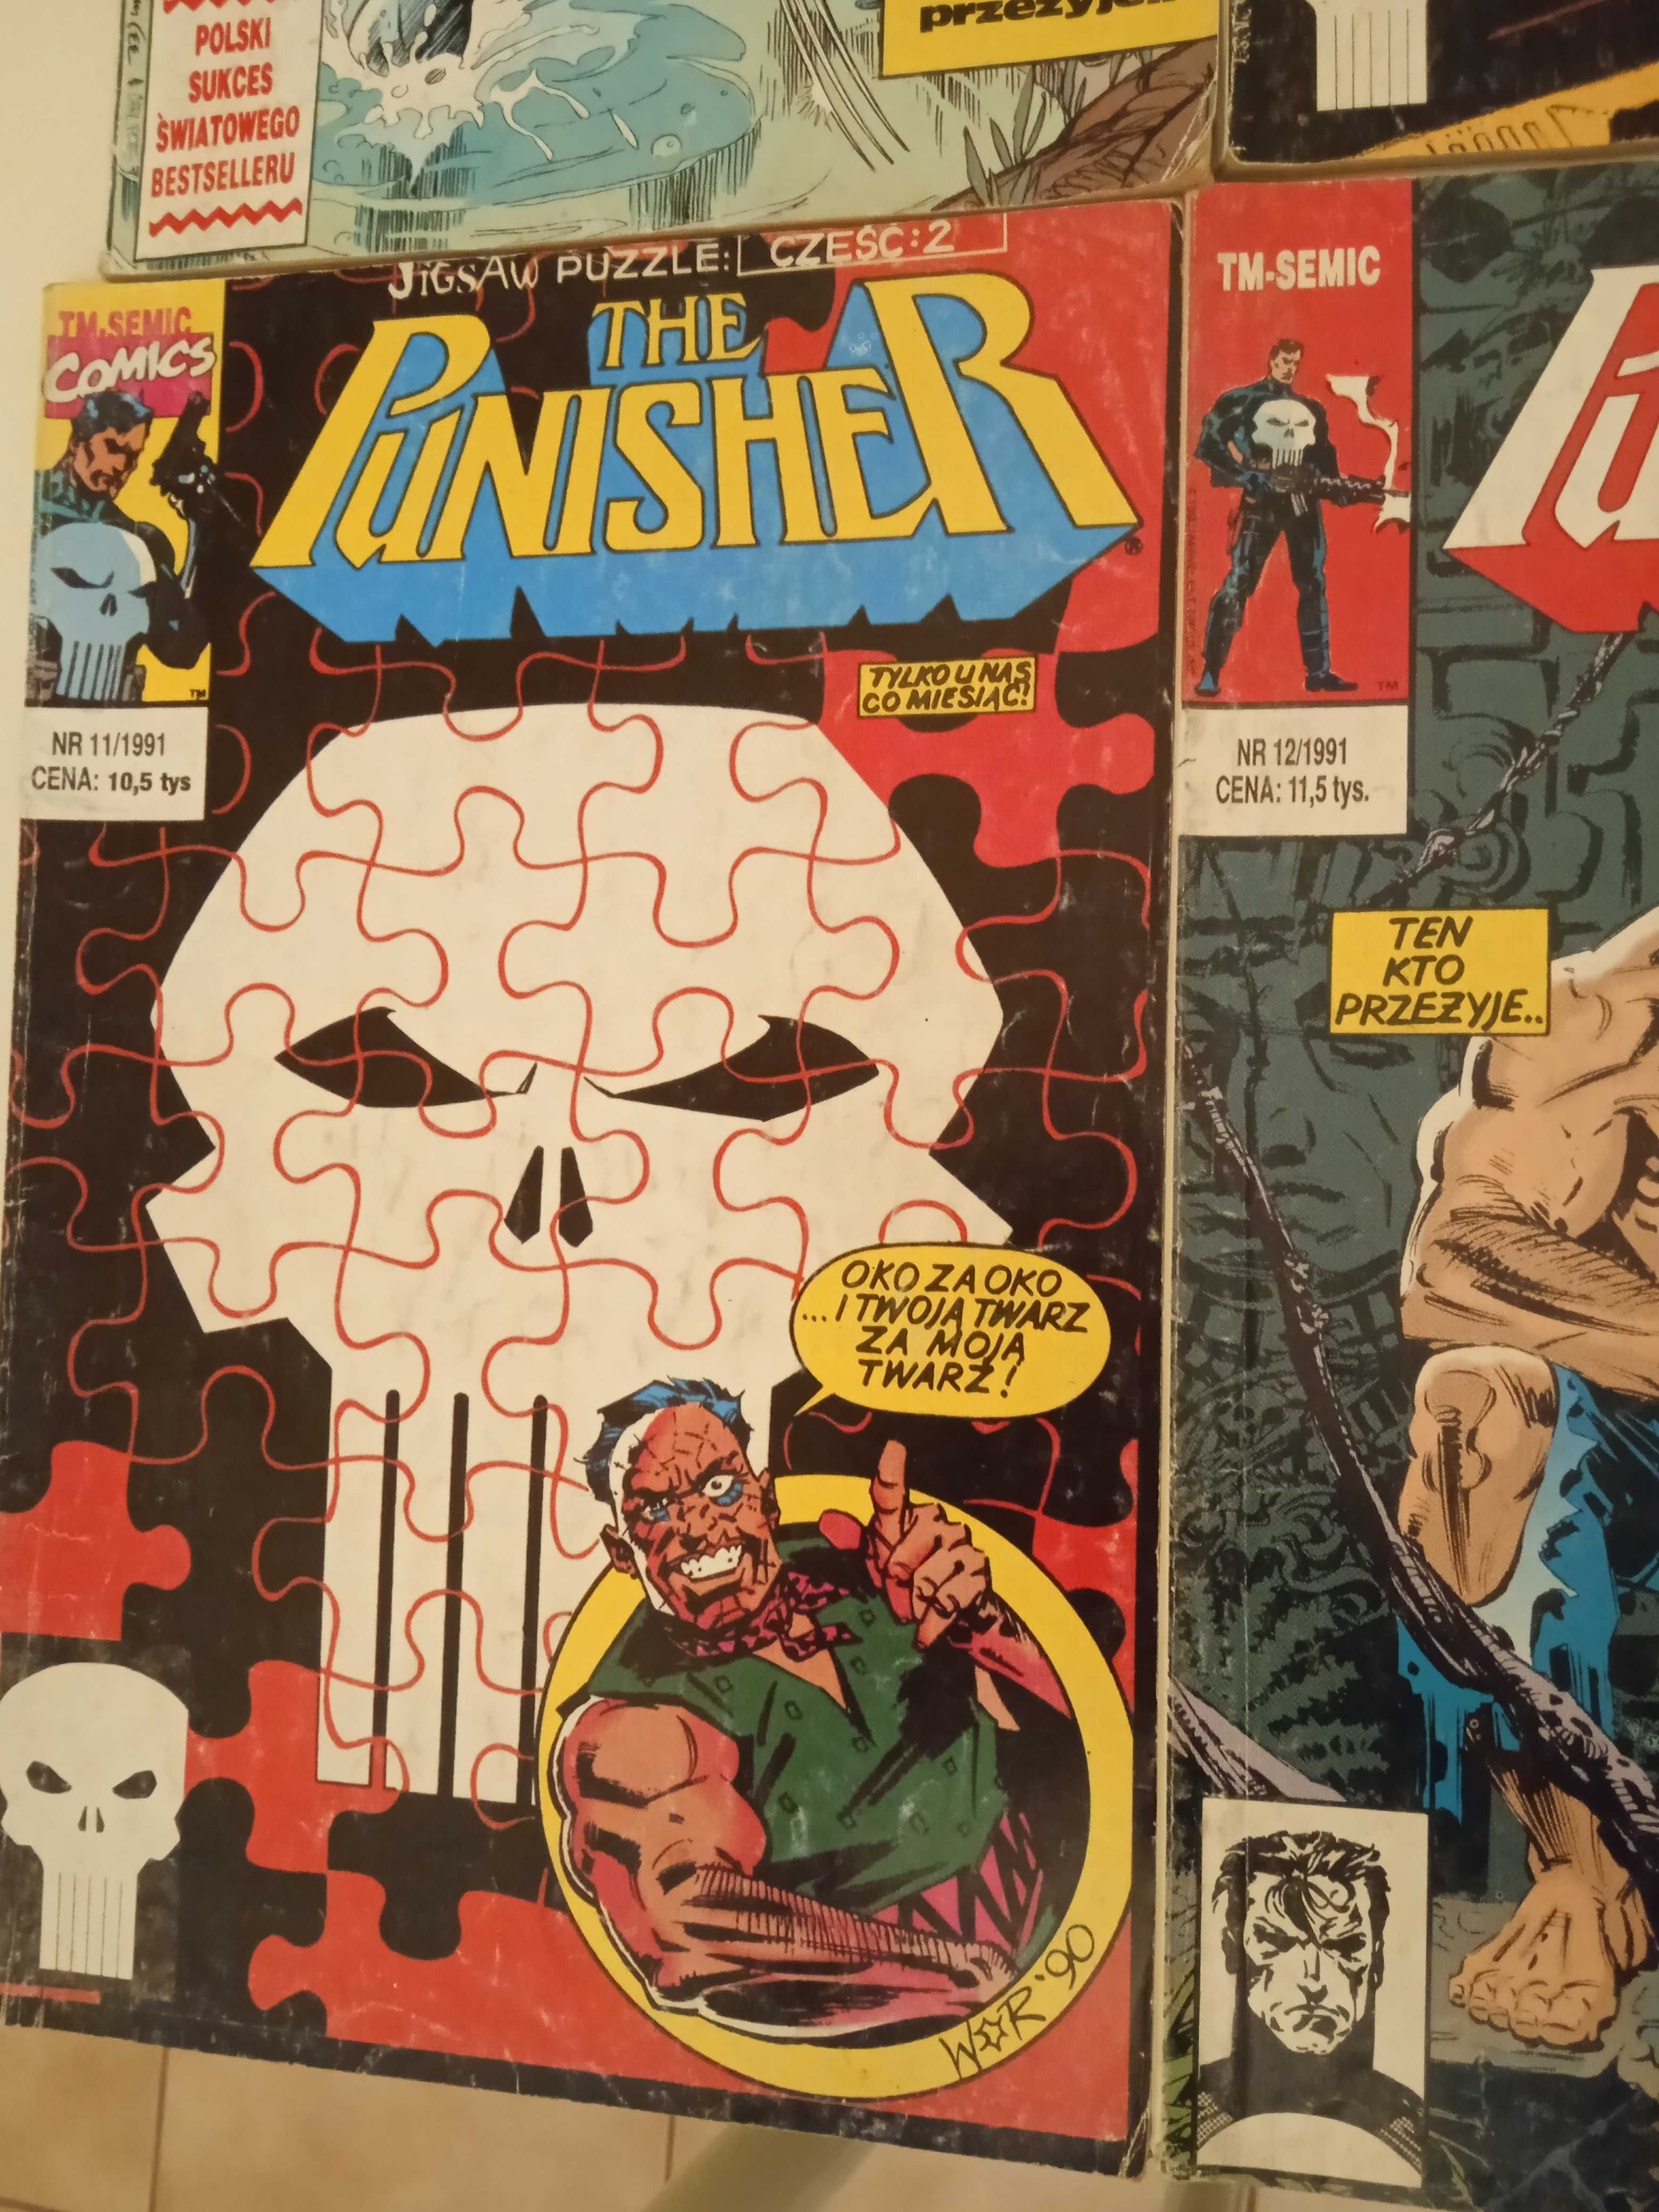 Komiksy serii Punisher - kolekcja